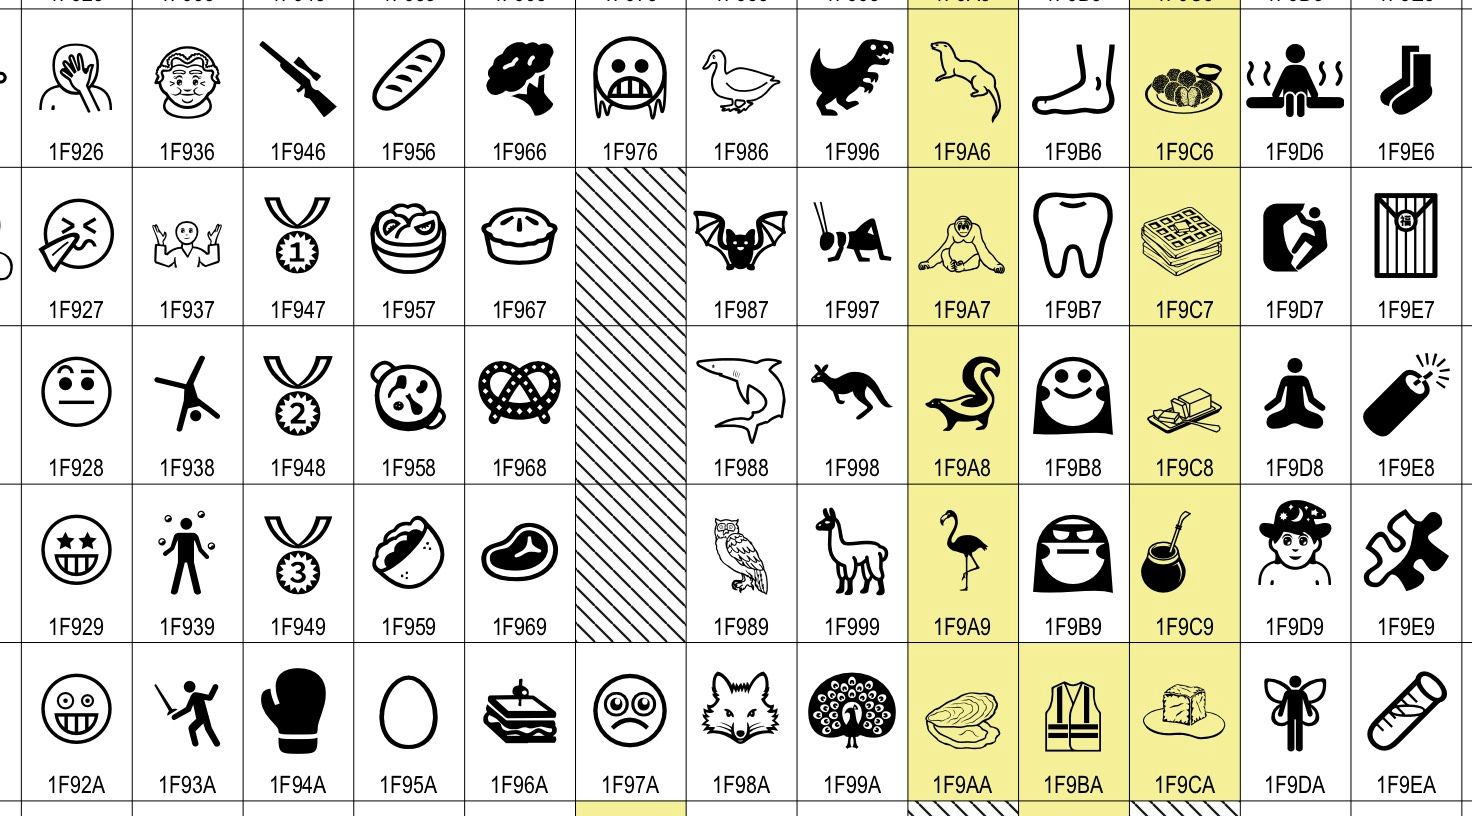 What's New in Unicode 12.0